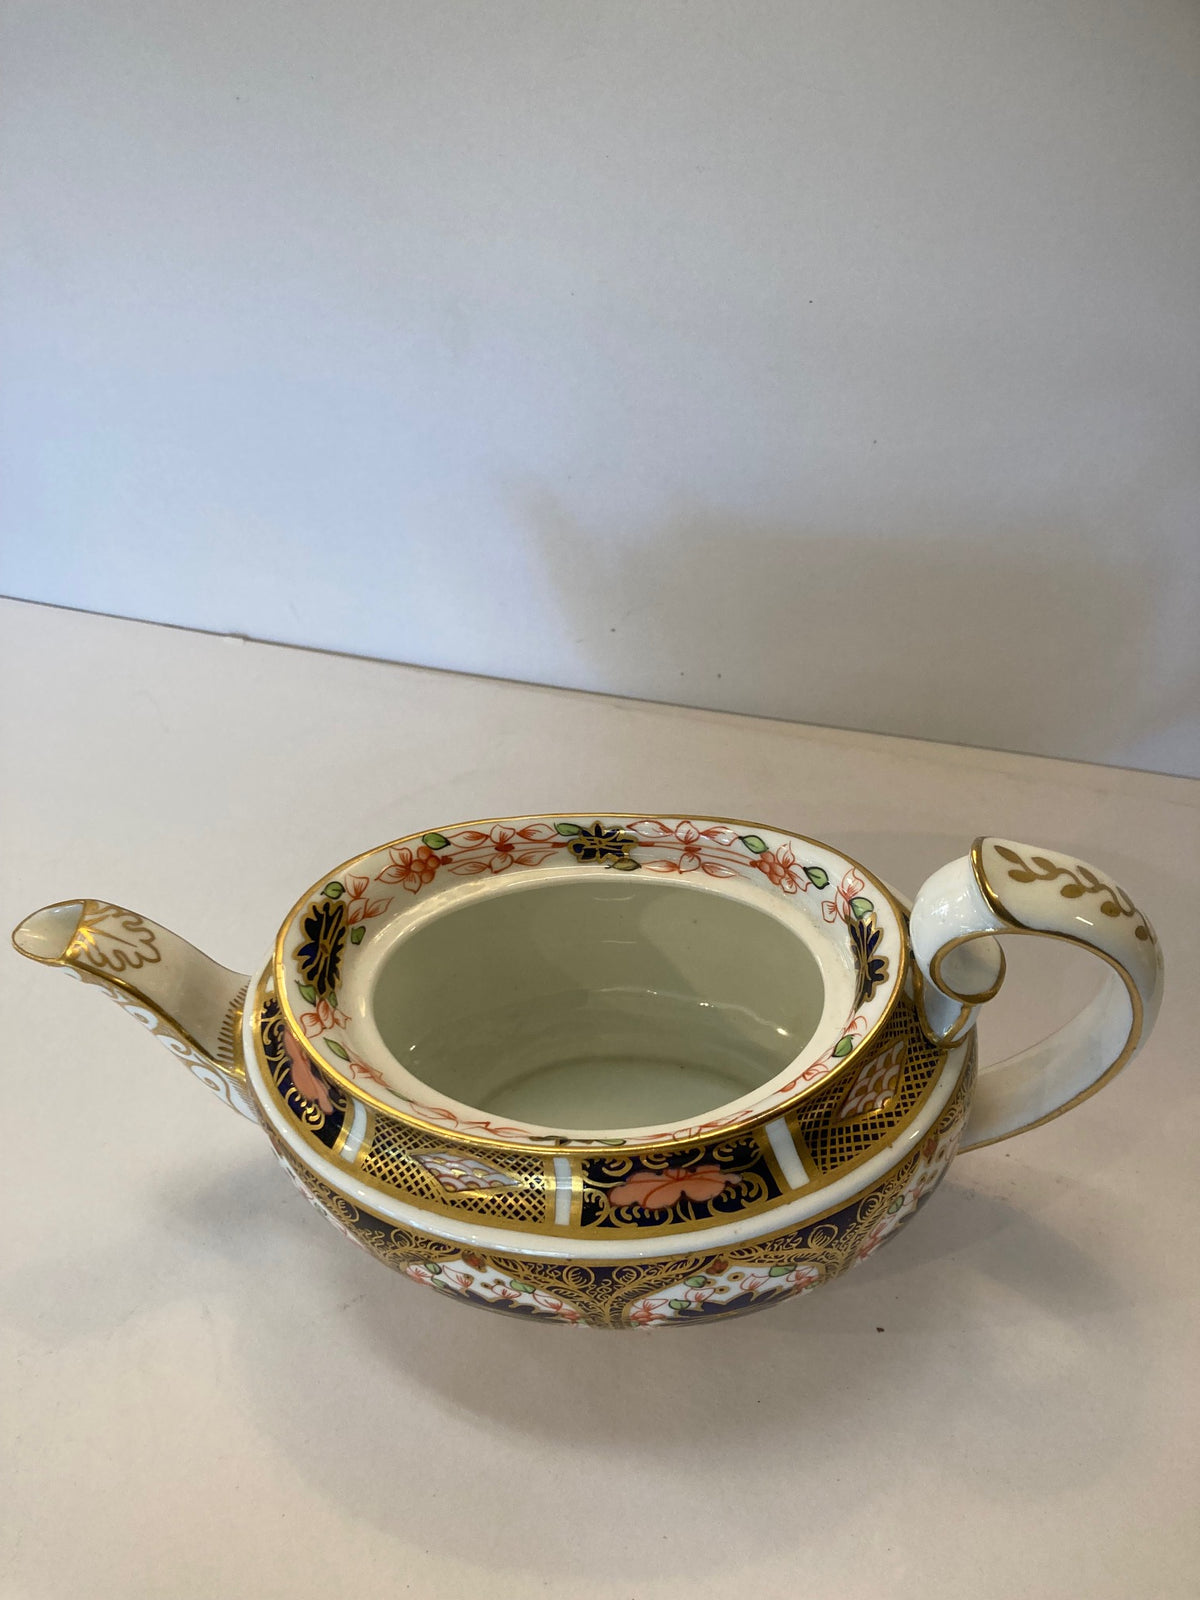 Royal Crown Derby "Old Imari" Tea Pot